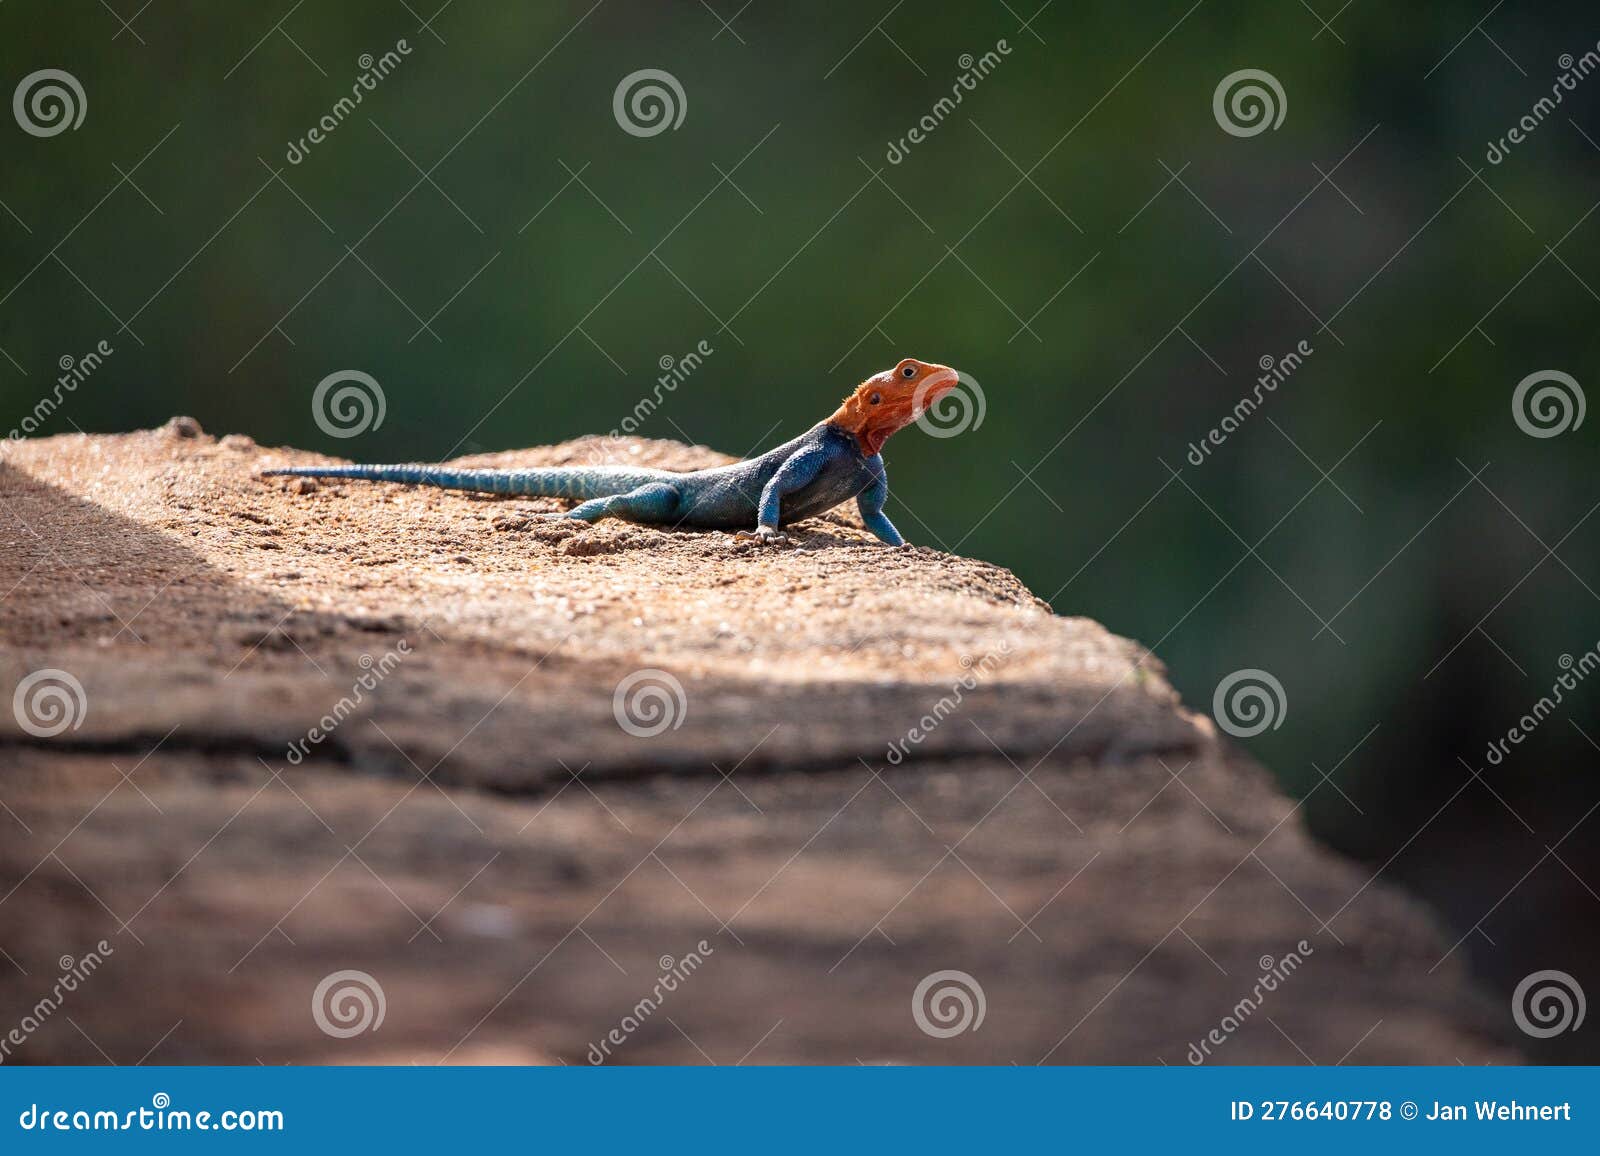 a settler dragon sunbathes, kenya, africa